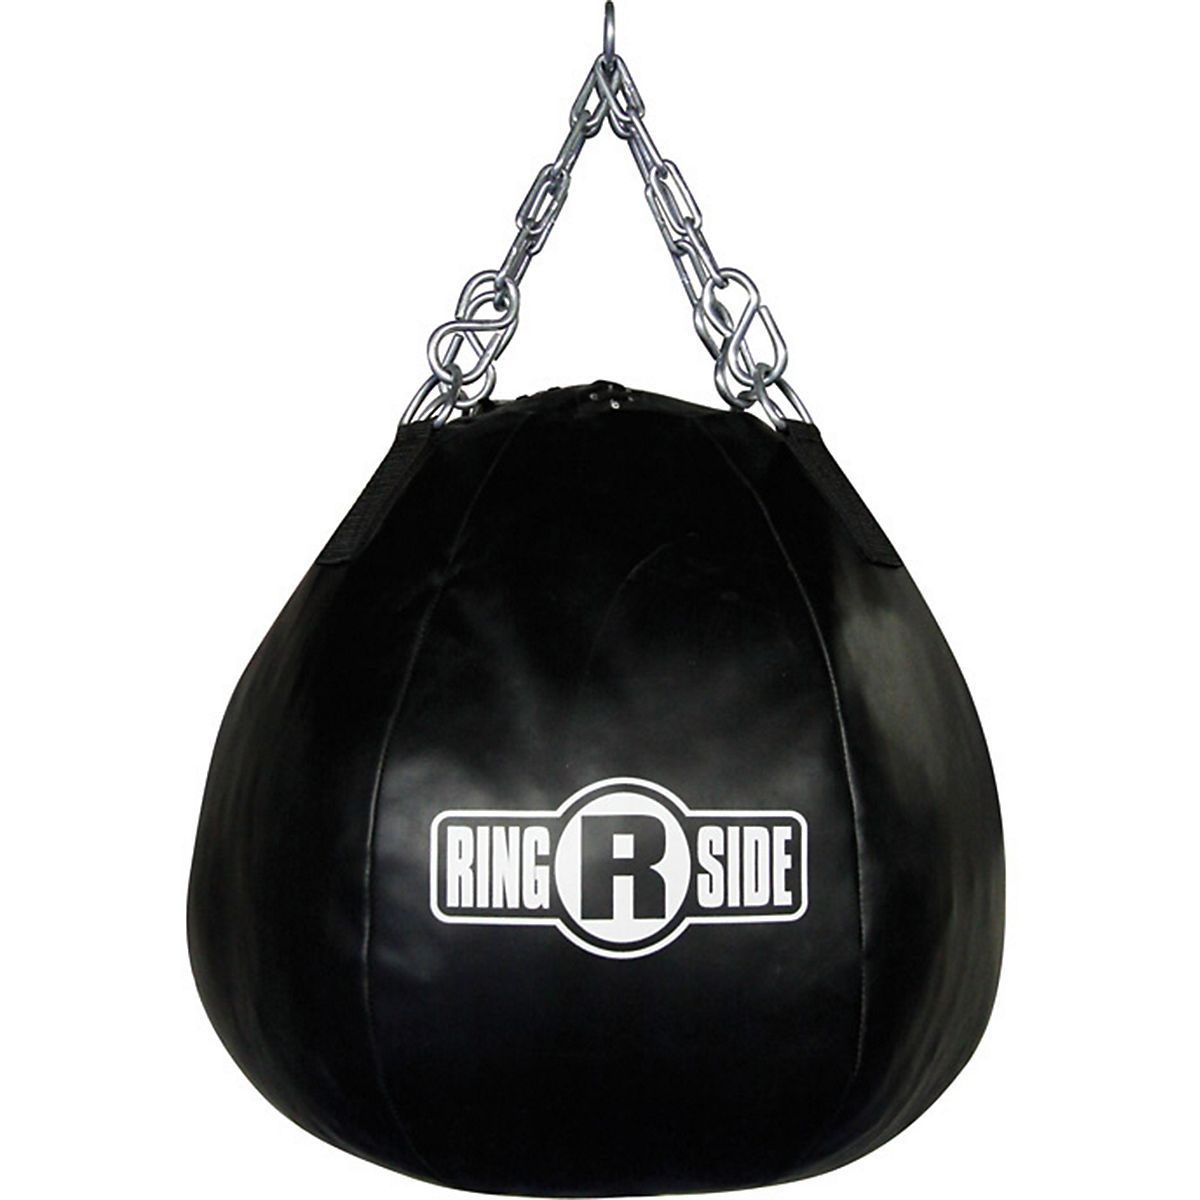 Ringside Head Shot 65 lb. Boxing Bag | Academy